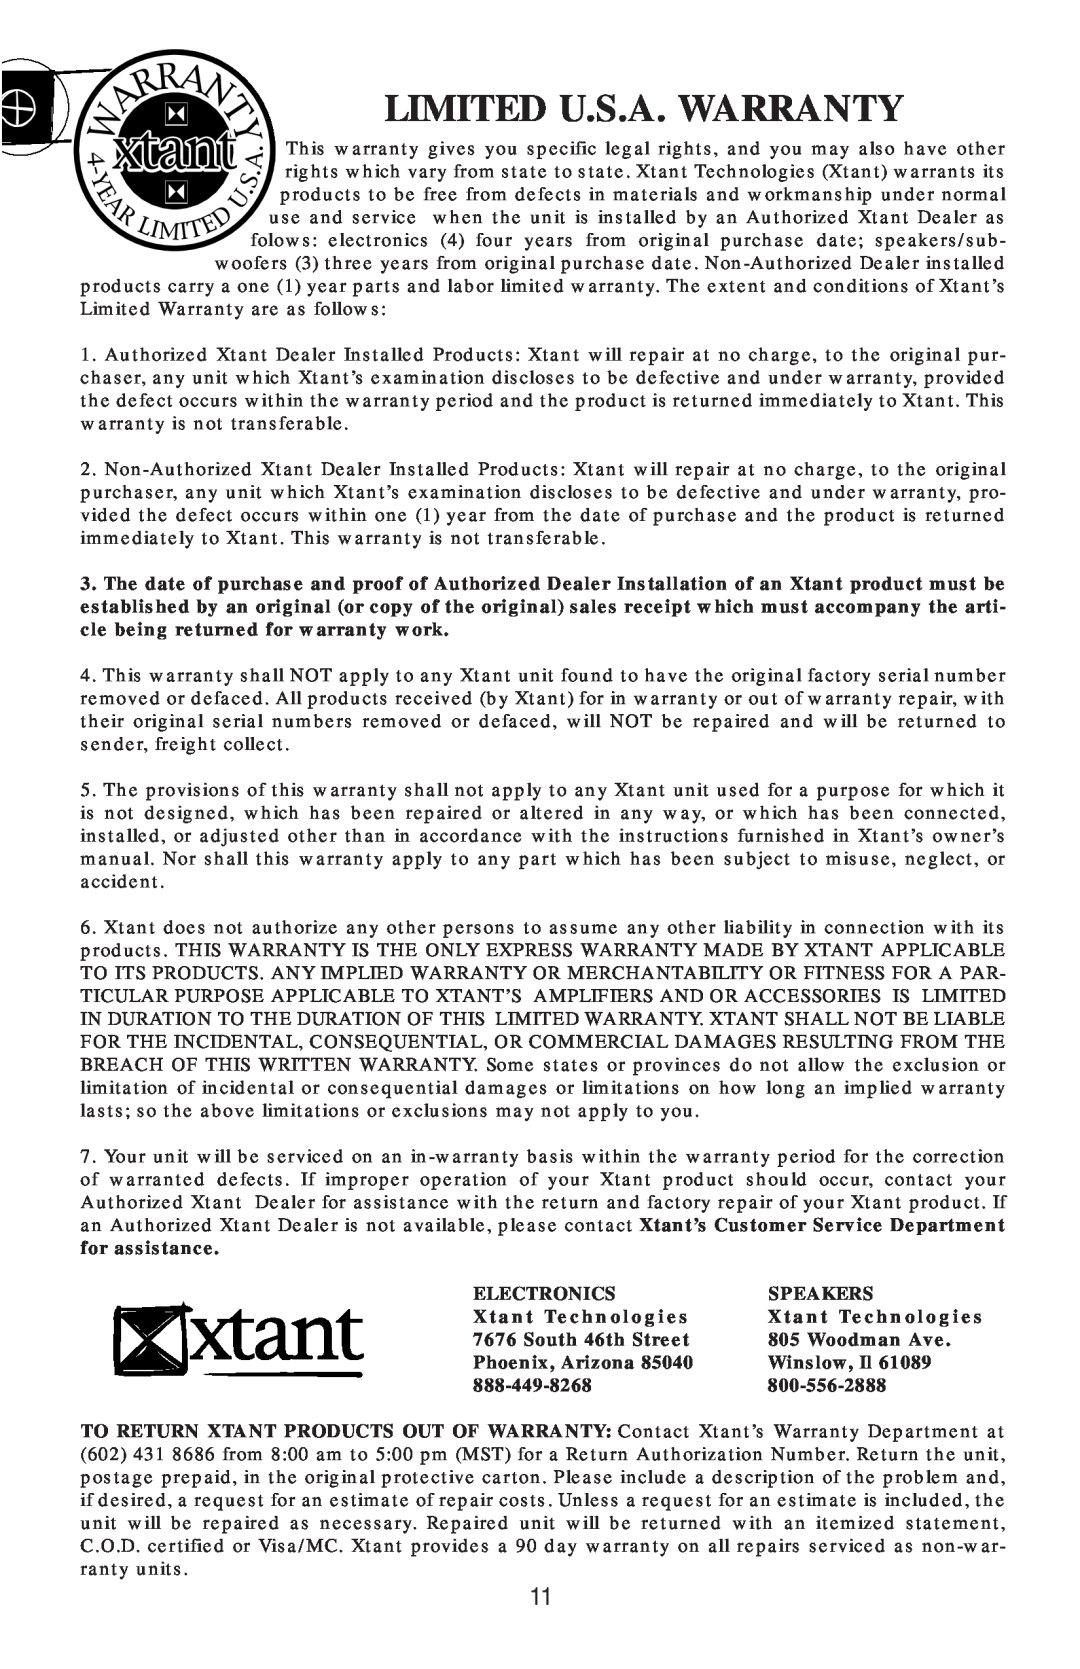 Xtant Model 603x manual Limited U.S.A. Warranty 